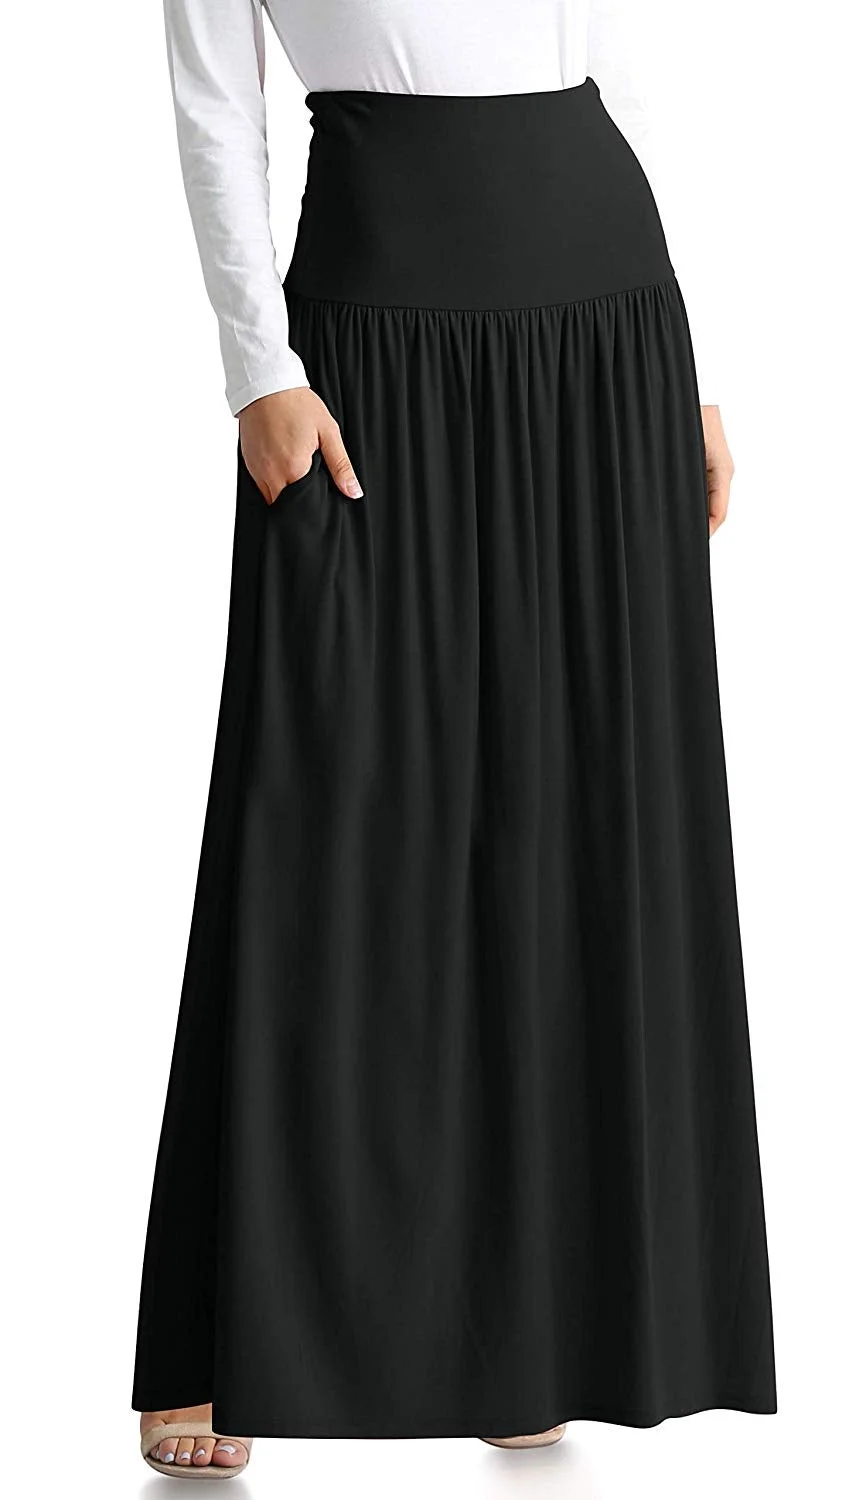 Pockets Reg and Plus Size Skirt Womens Long Maxi Skirt